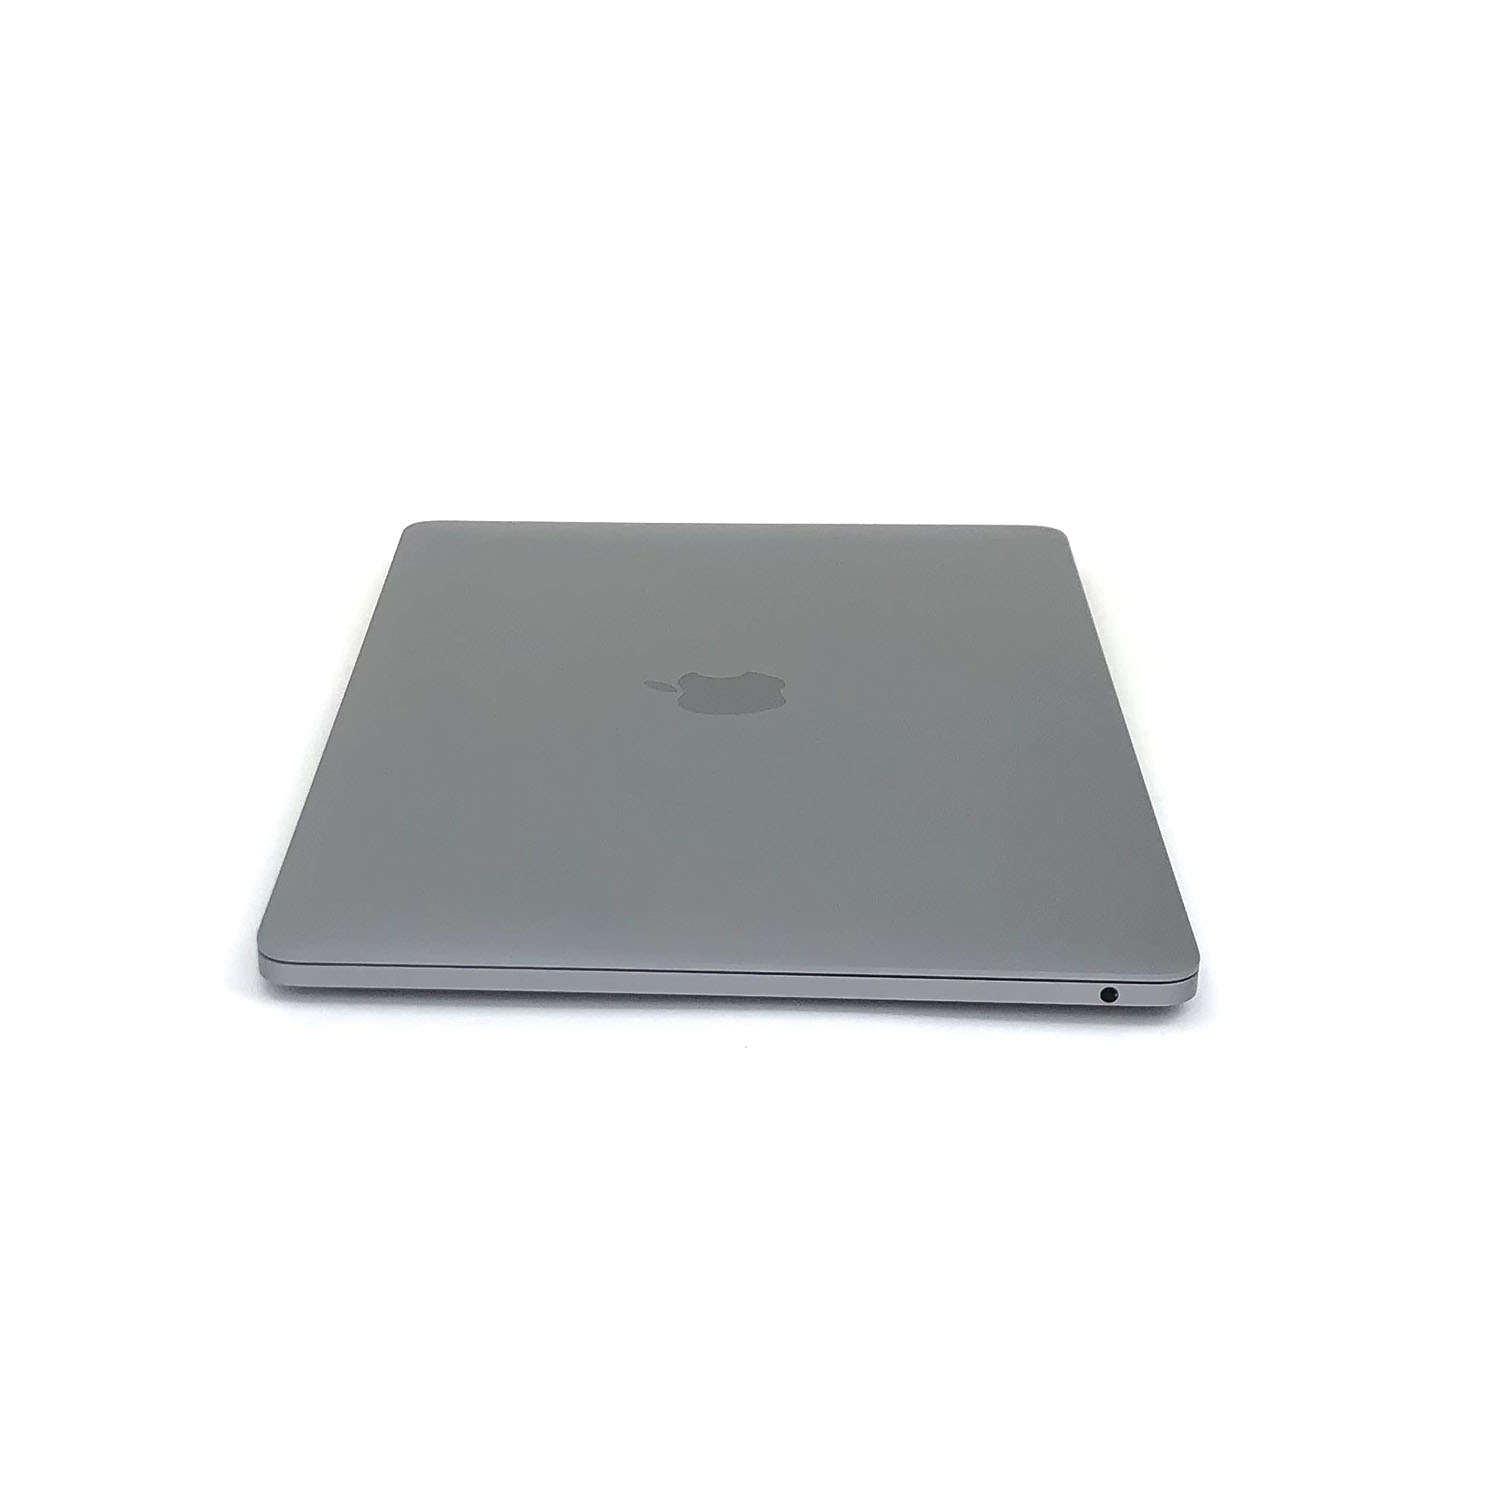 Macbook Pro 13 Space Grey i5 2.3Ghz 8GB 128GB SSD MPXQ2LL/A Seminovo